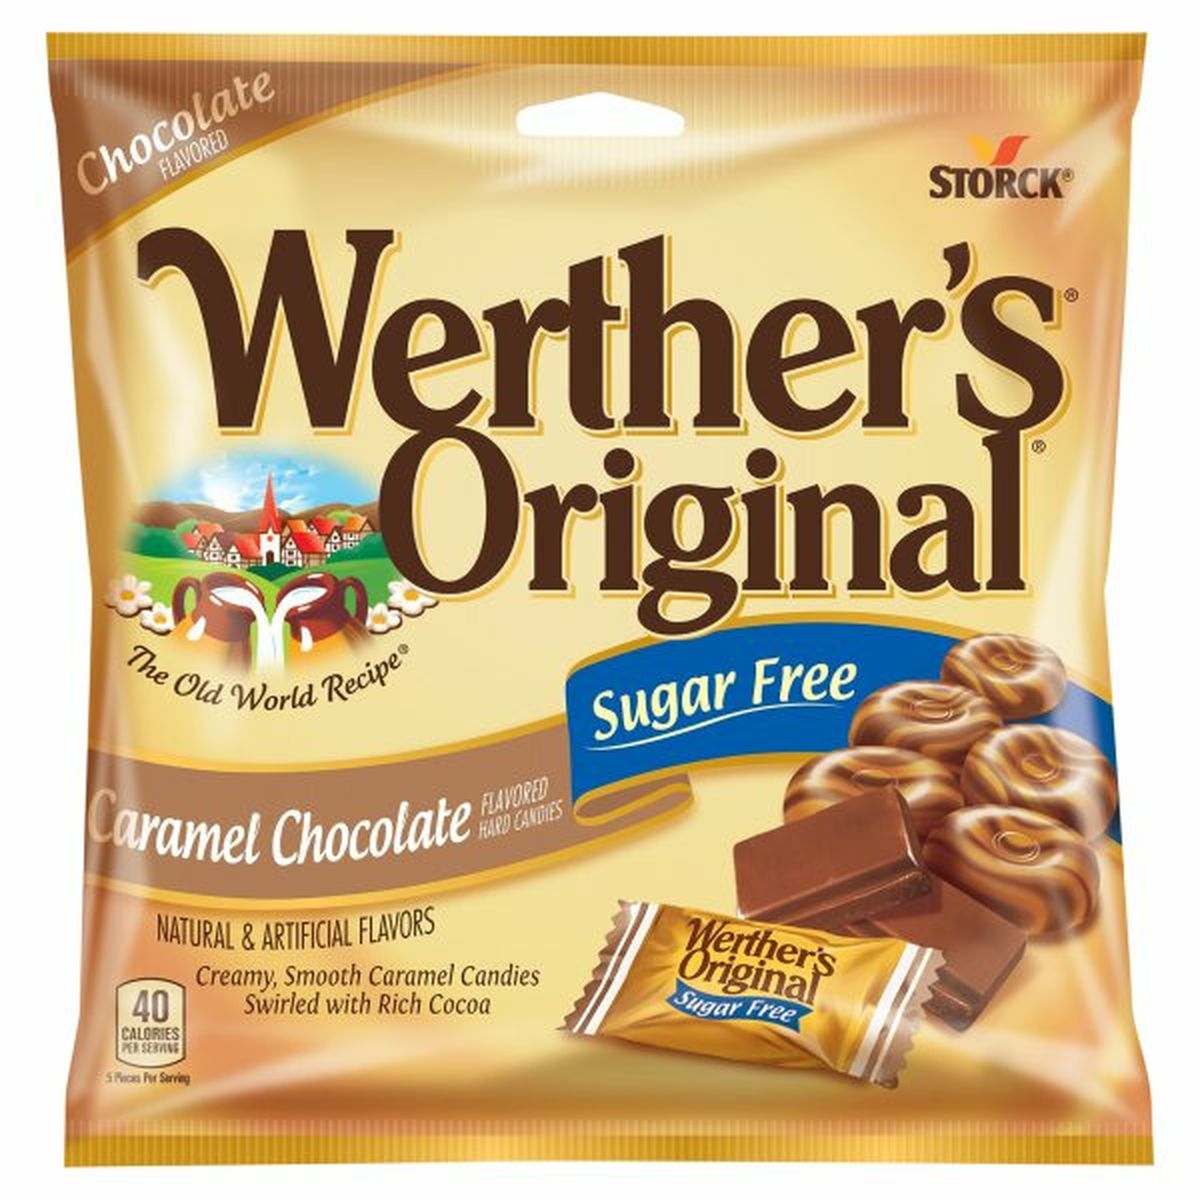 Calories in Werther's Original Hard Candies, Sugar Free, Caramel Chocolate